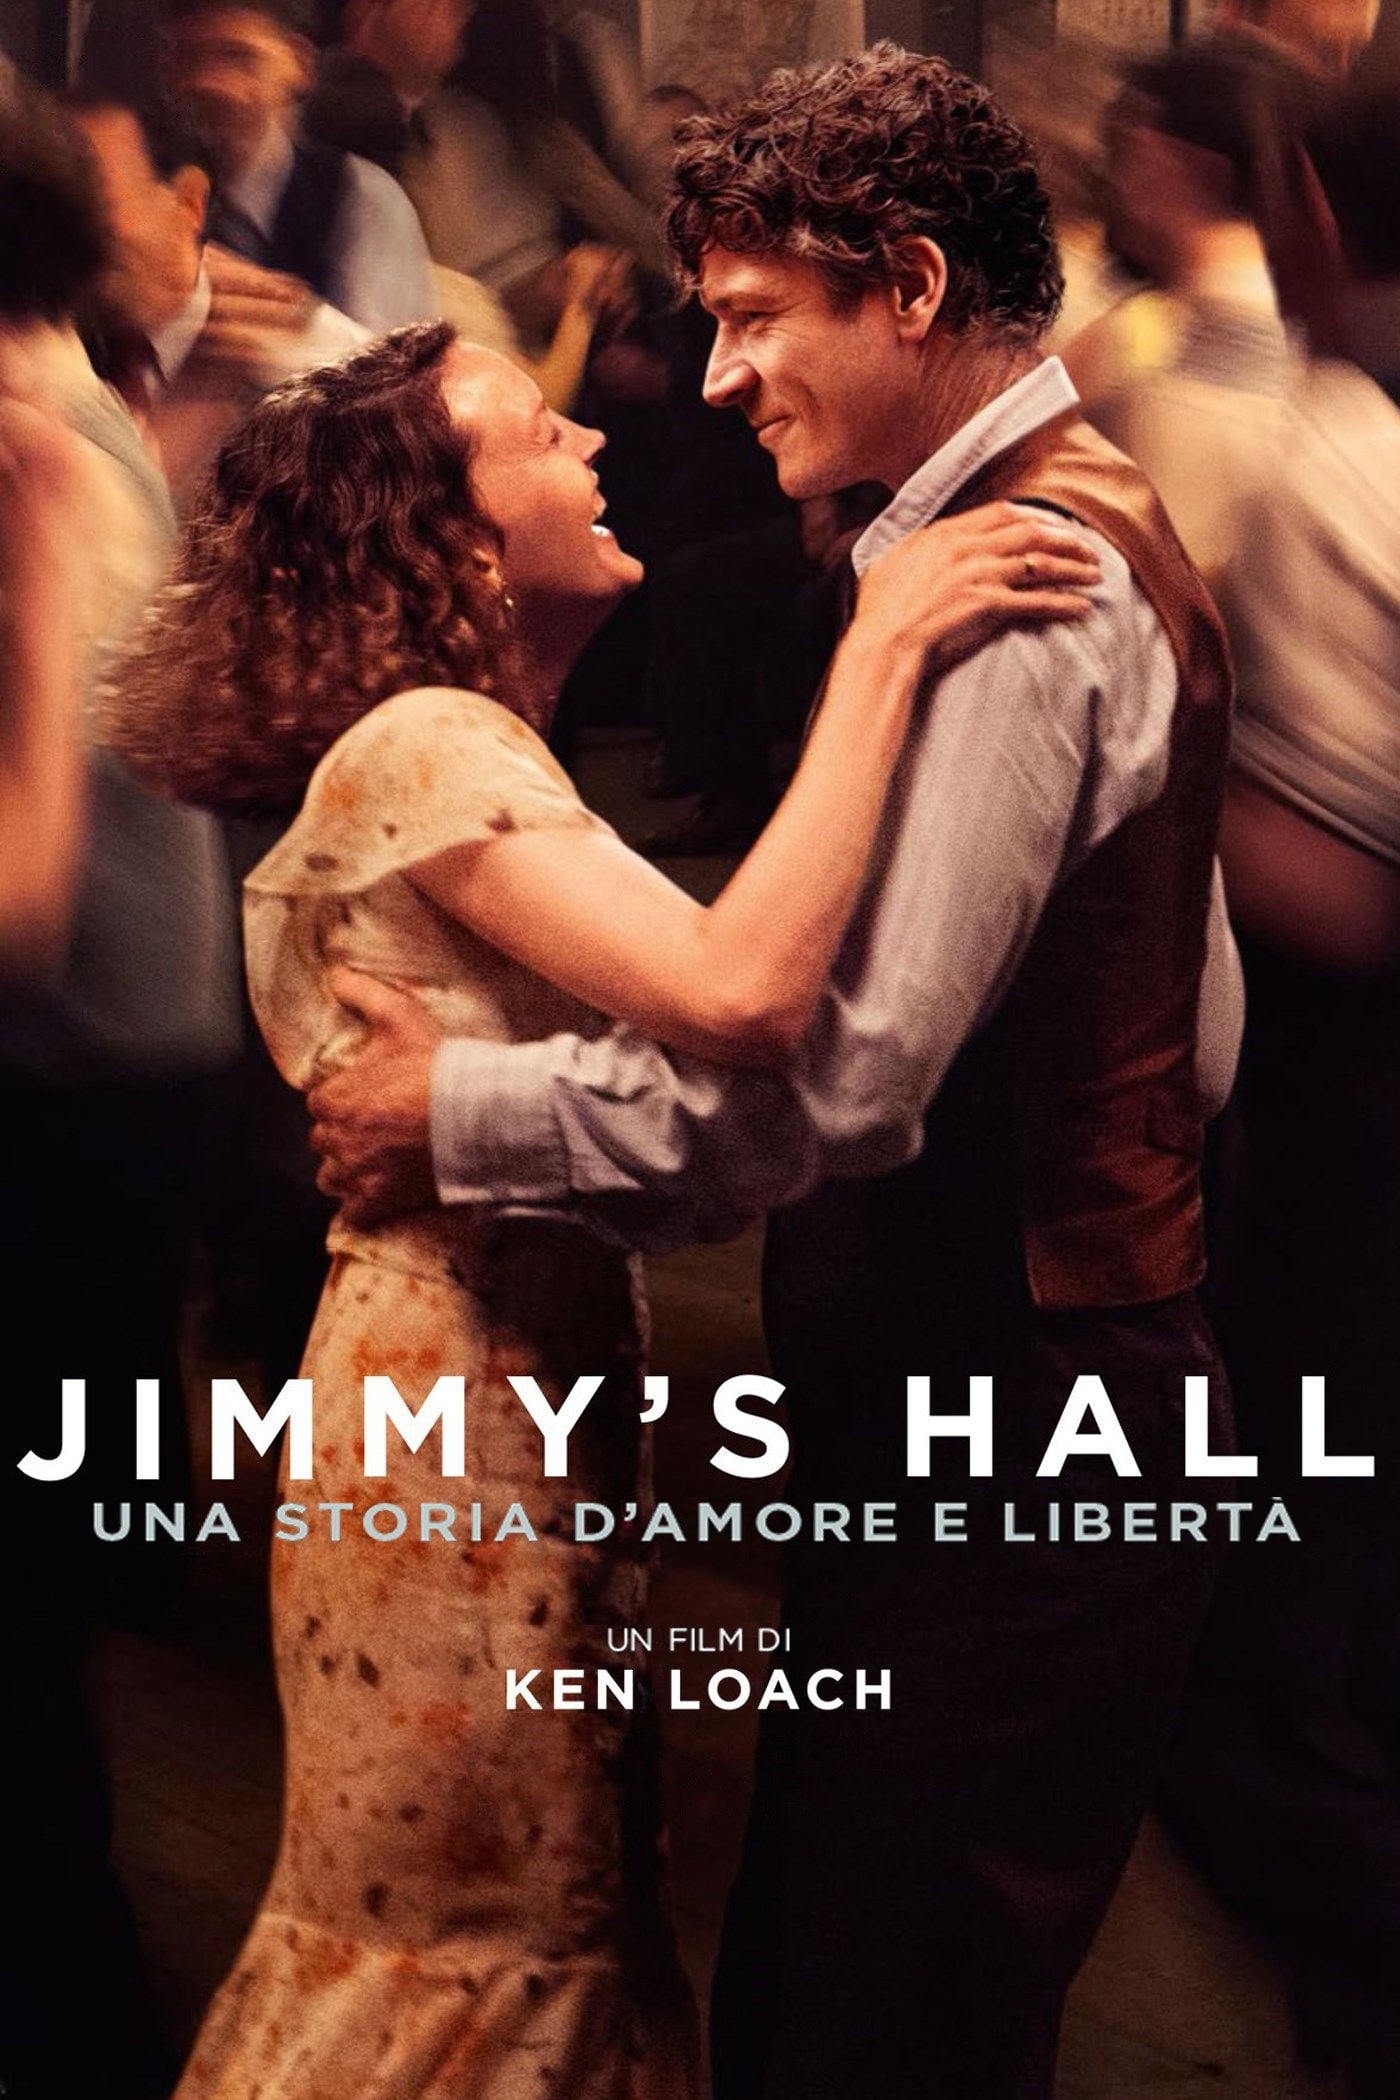 Jimmy’s Hall – Una storia d’amore e libertà [HD] (2014)